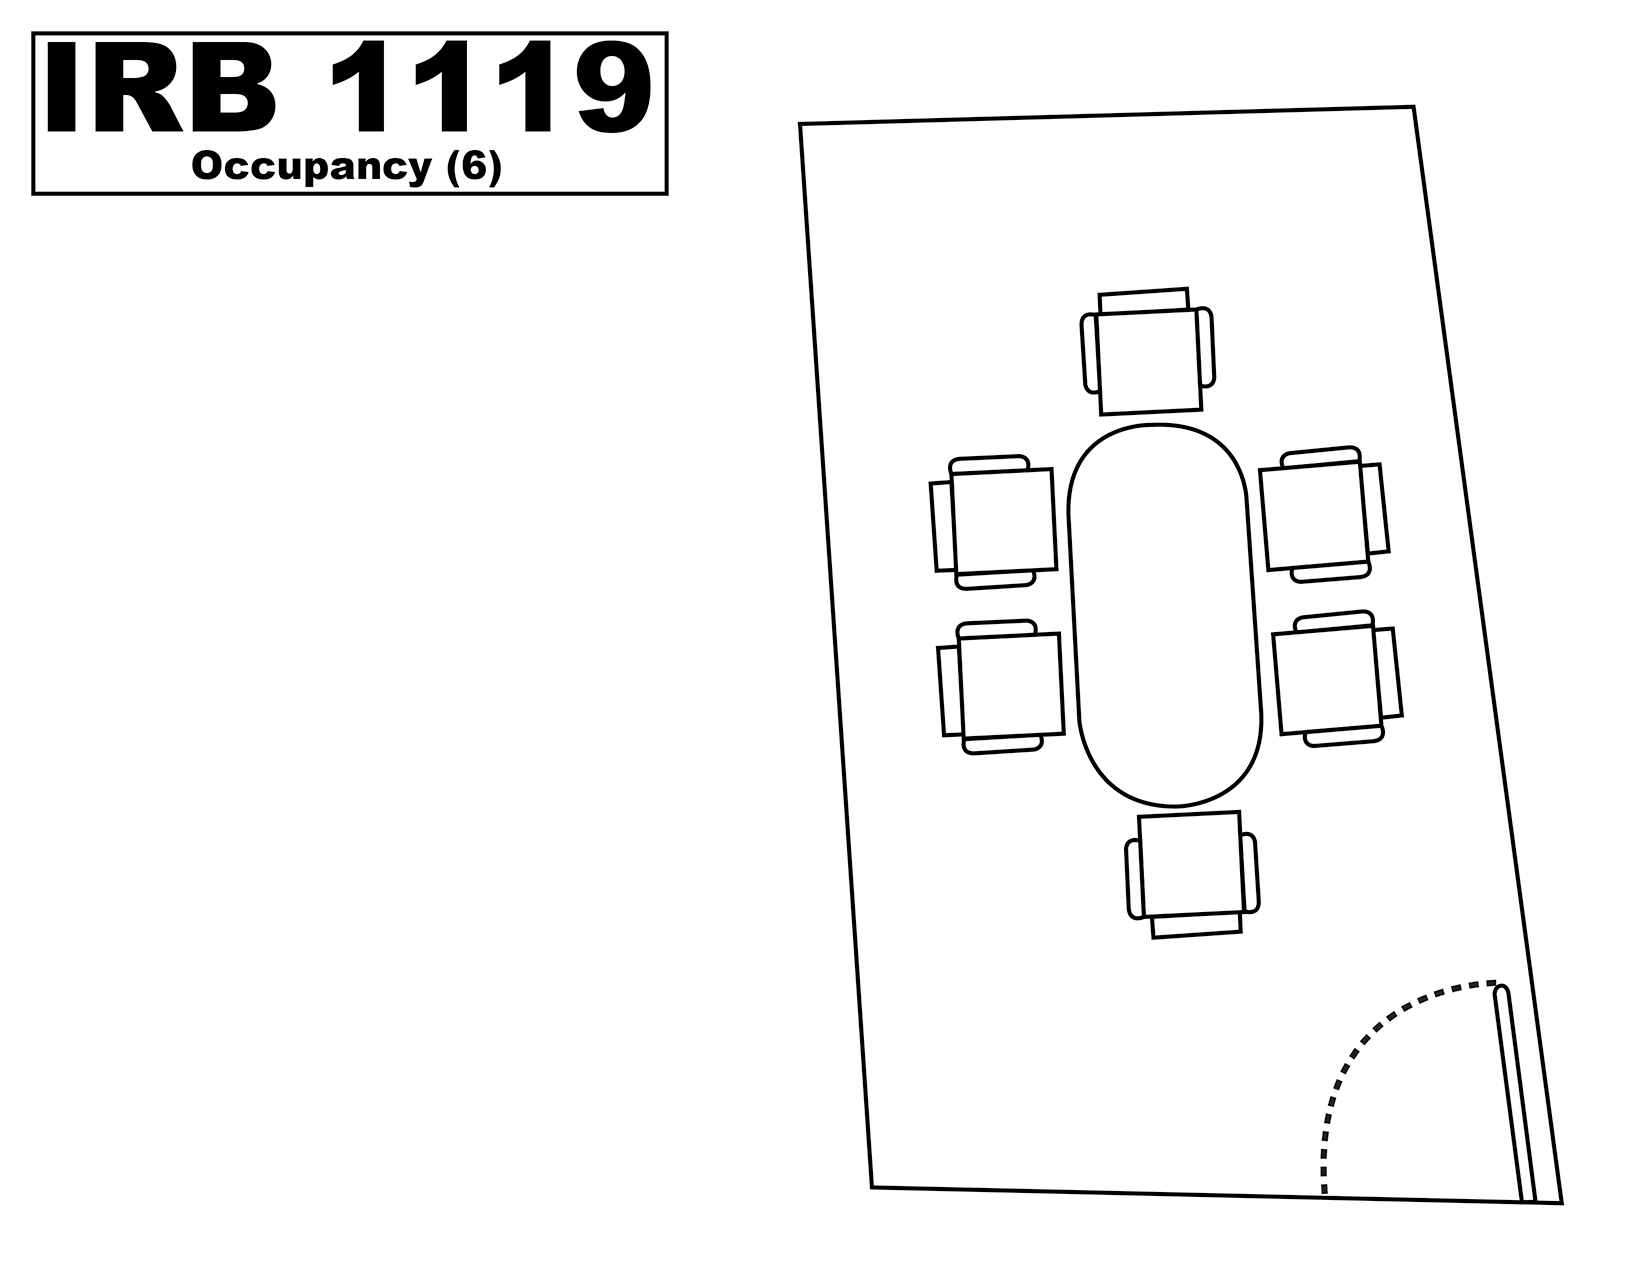 IRB1119 floorplan